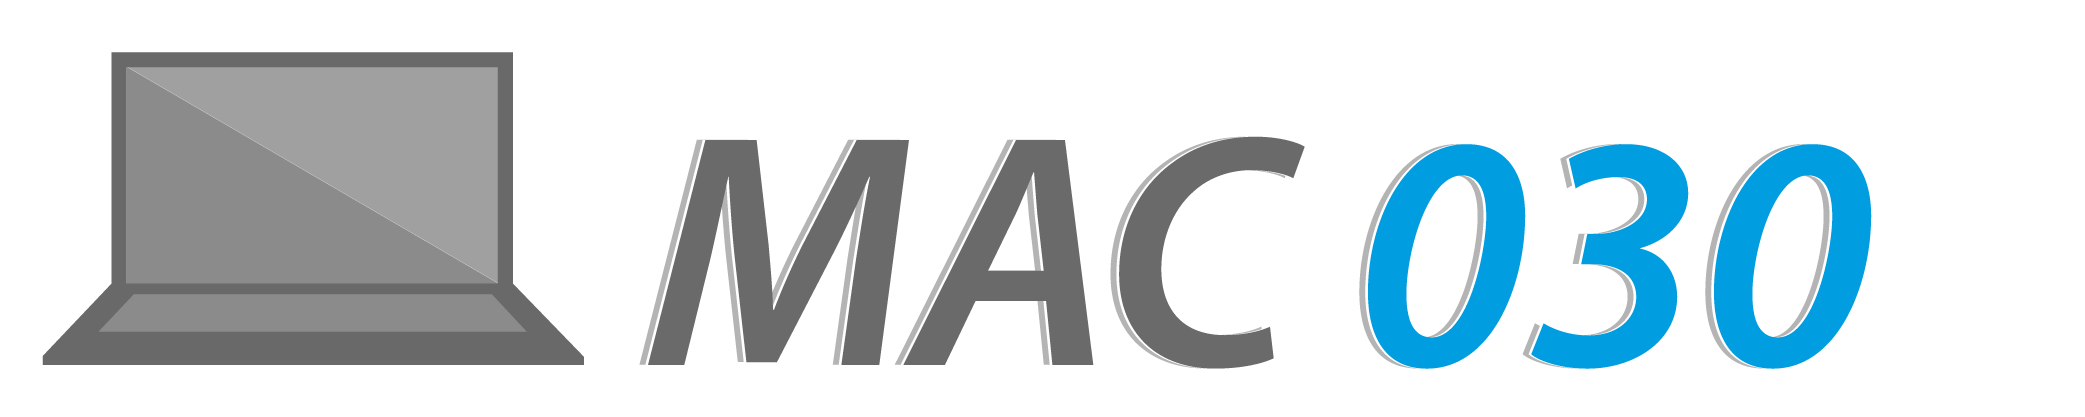 Mac030